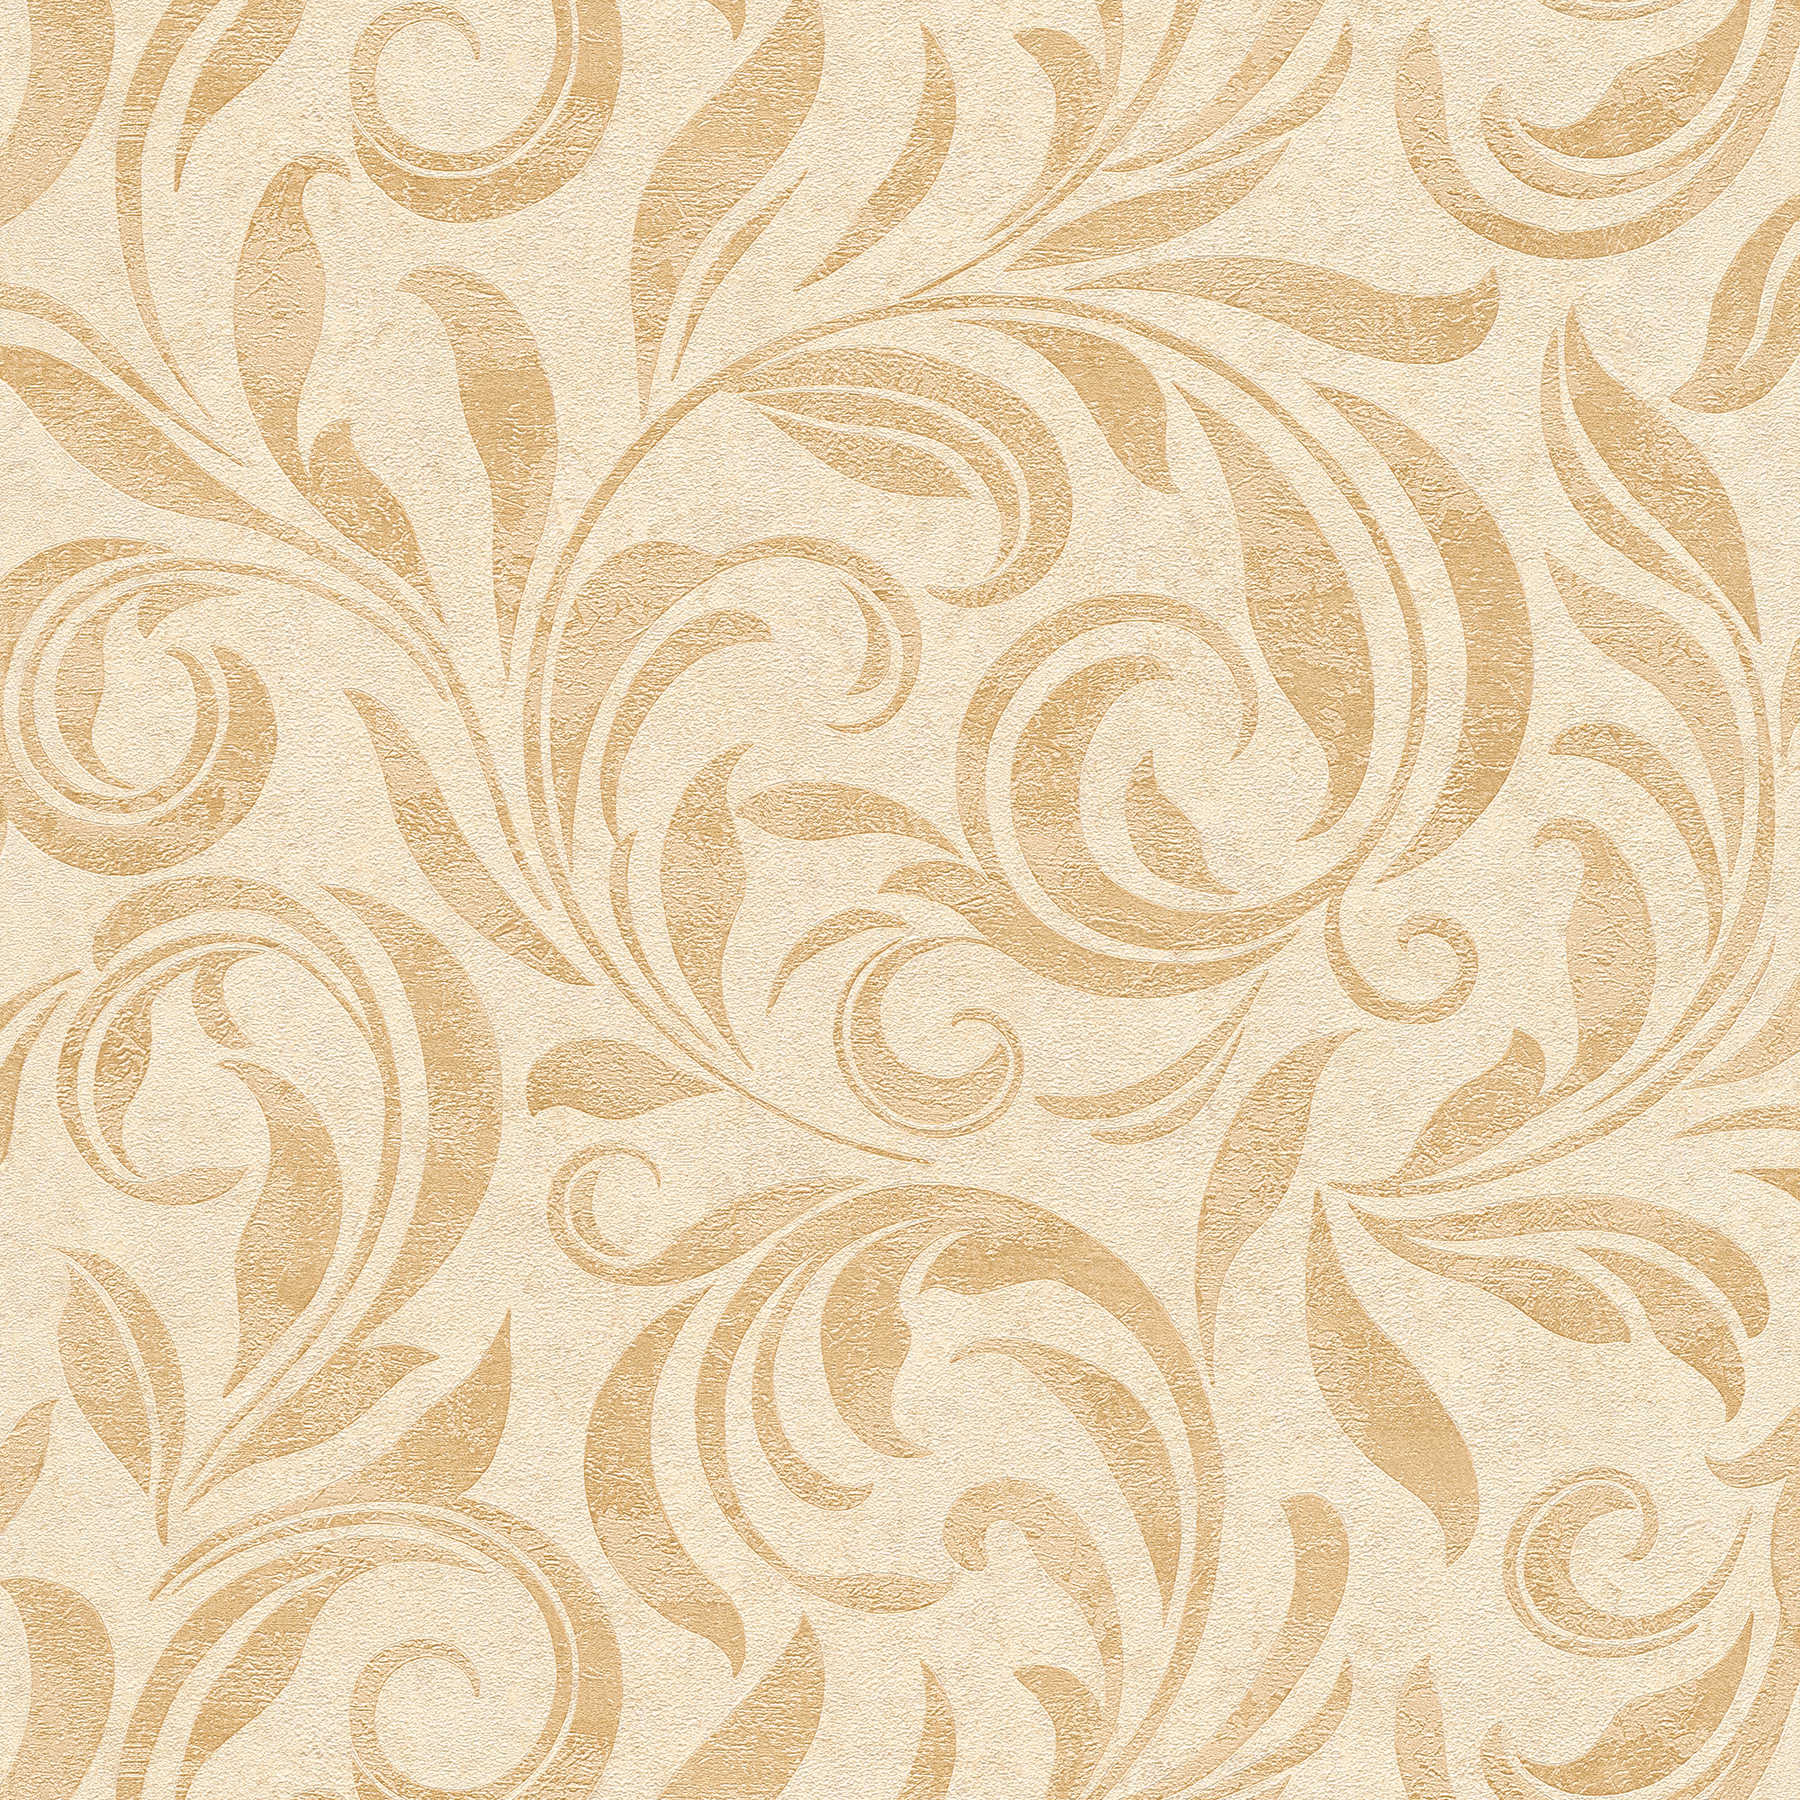 wallpaper metallic pattern with structure & colour hatching - beige, cream, metallic
